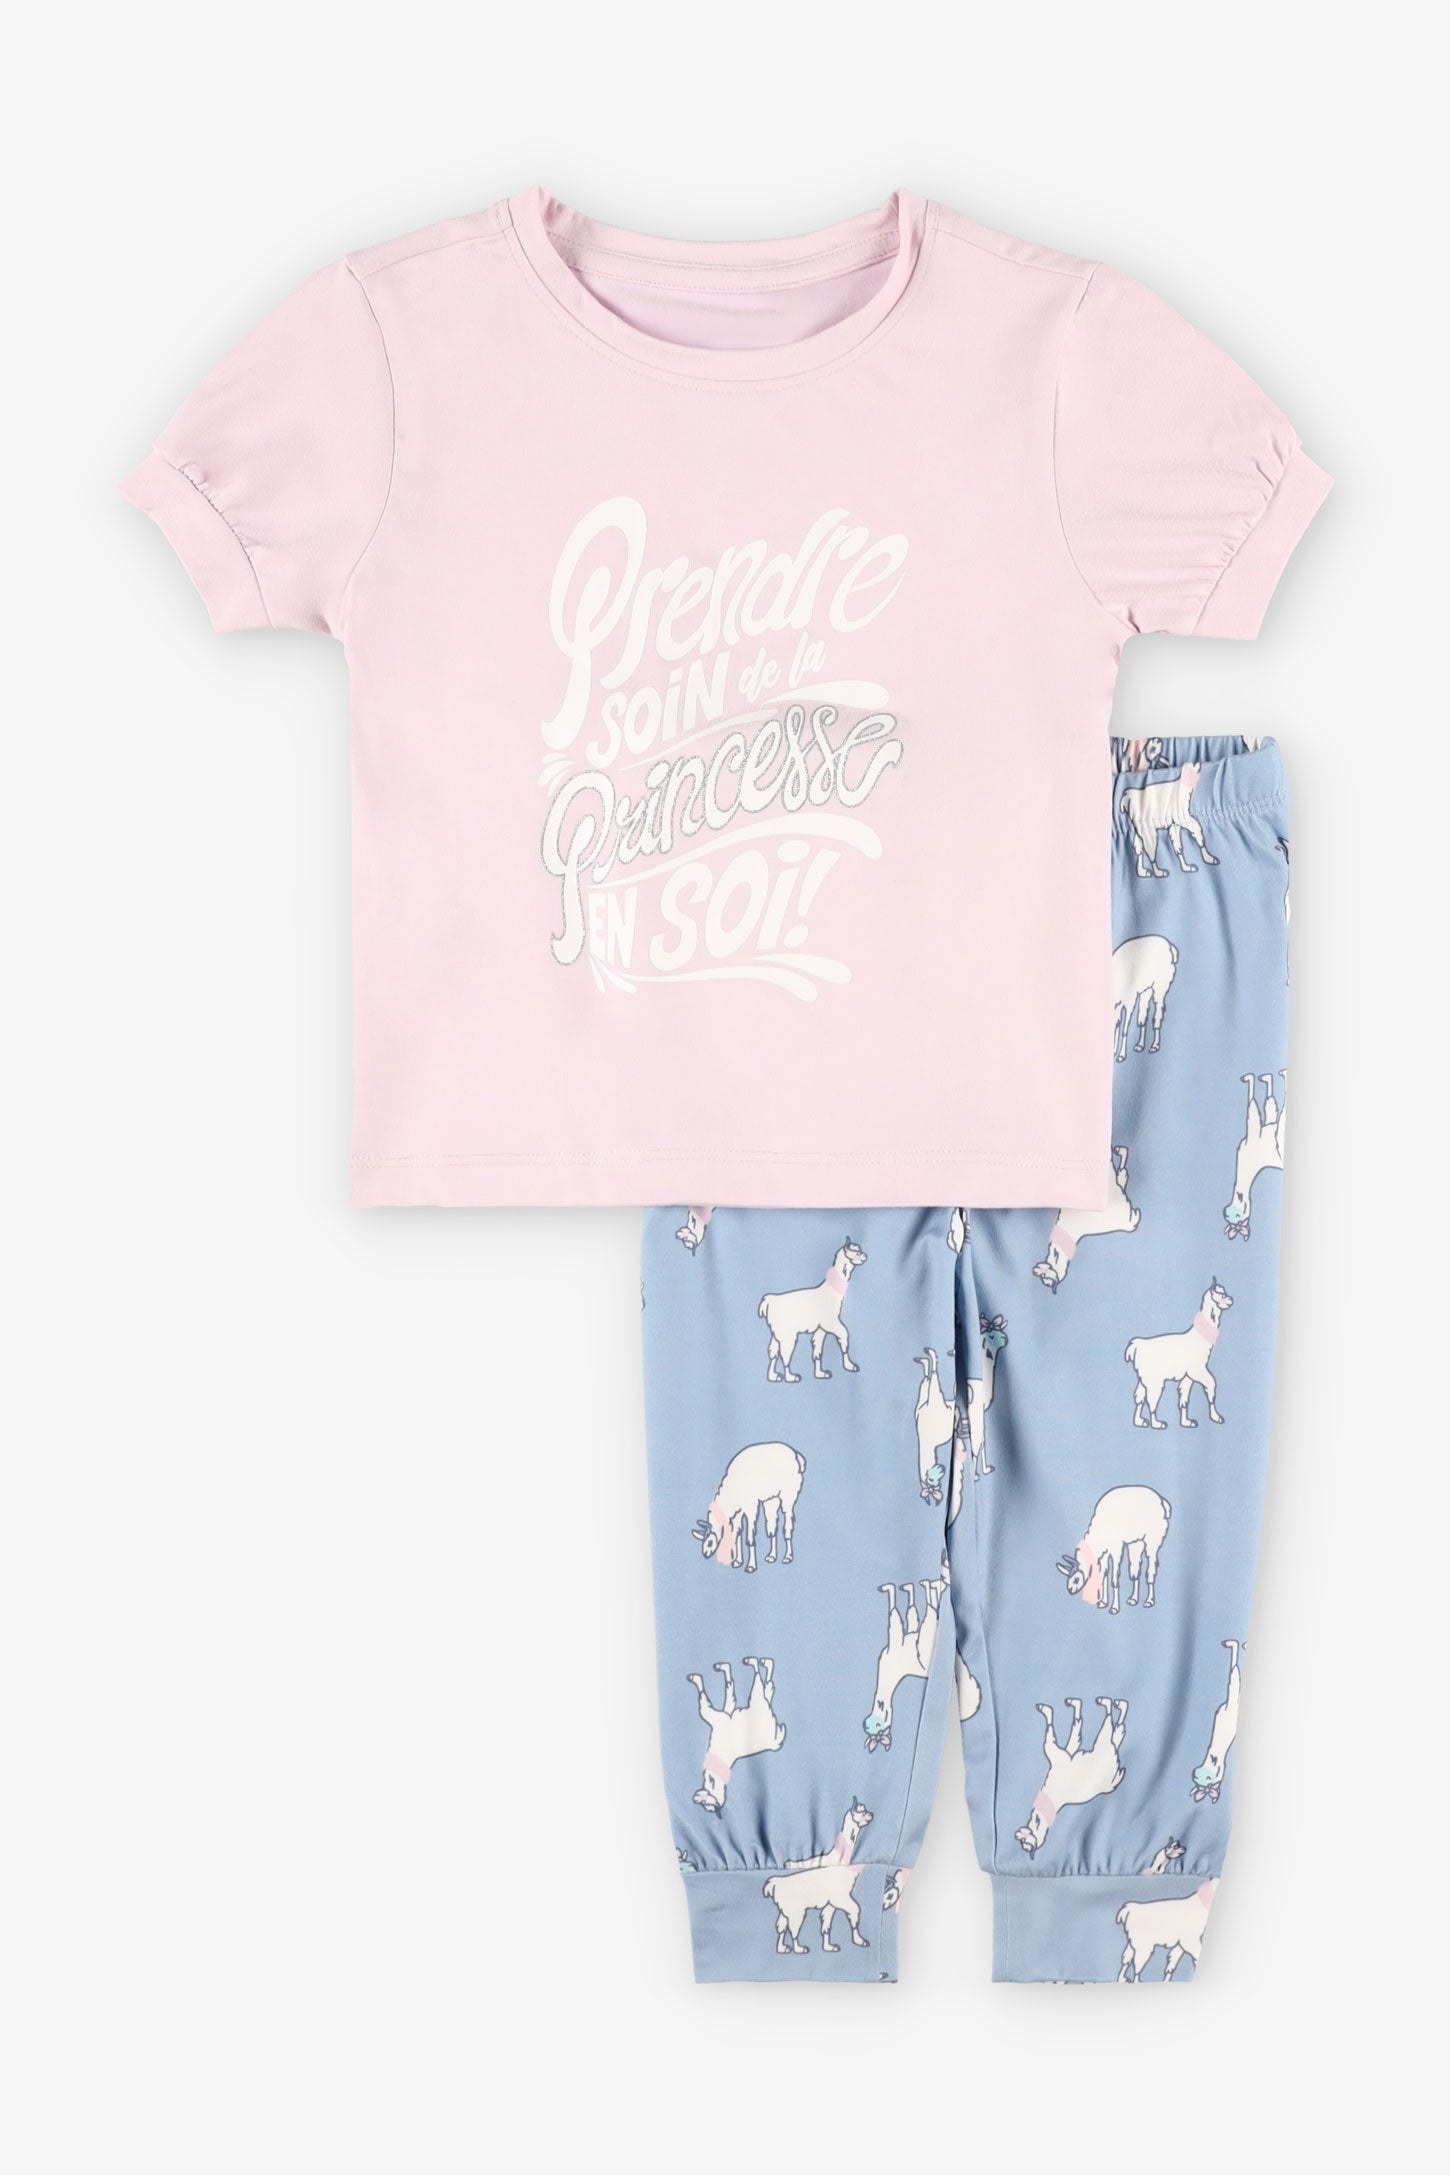 Pyjama 2-pièces Moss assorti famille, 2/35$ - Enfant fille && LILAS